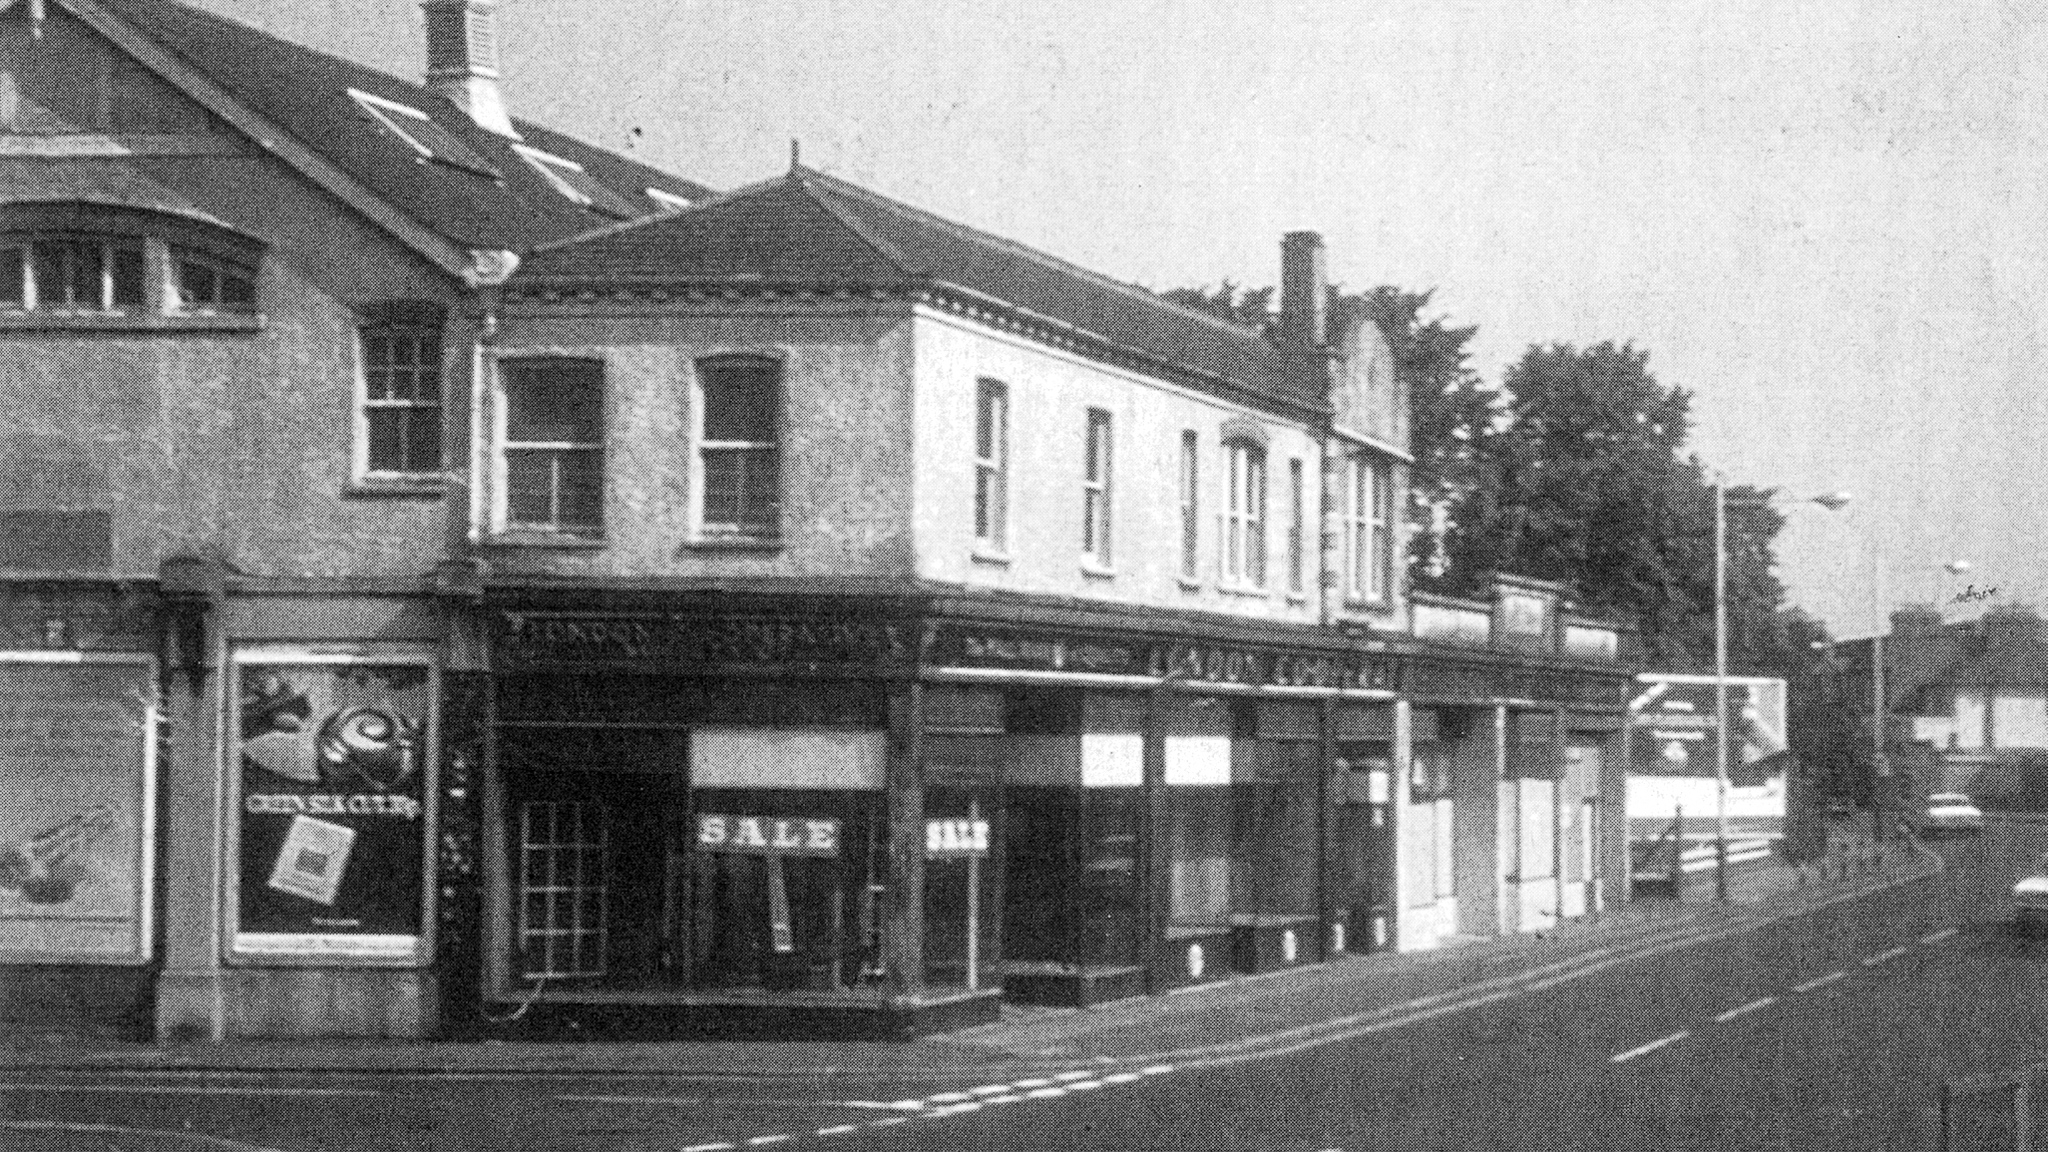 Now & Then - High Street, Yiewsley - 2019 vs c.1970